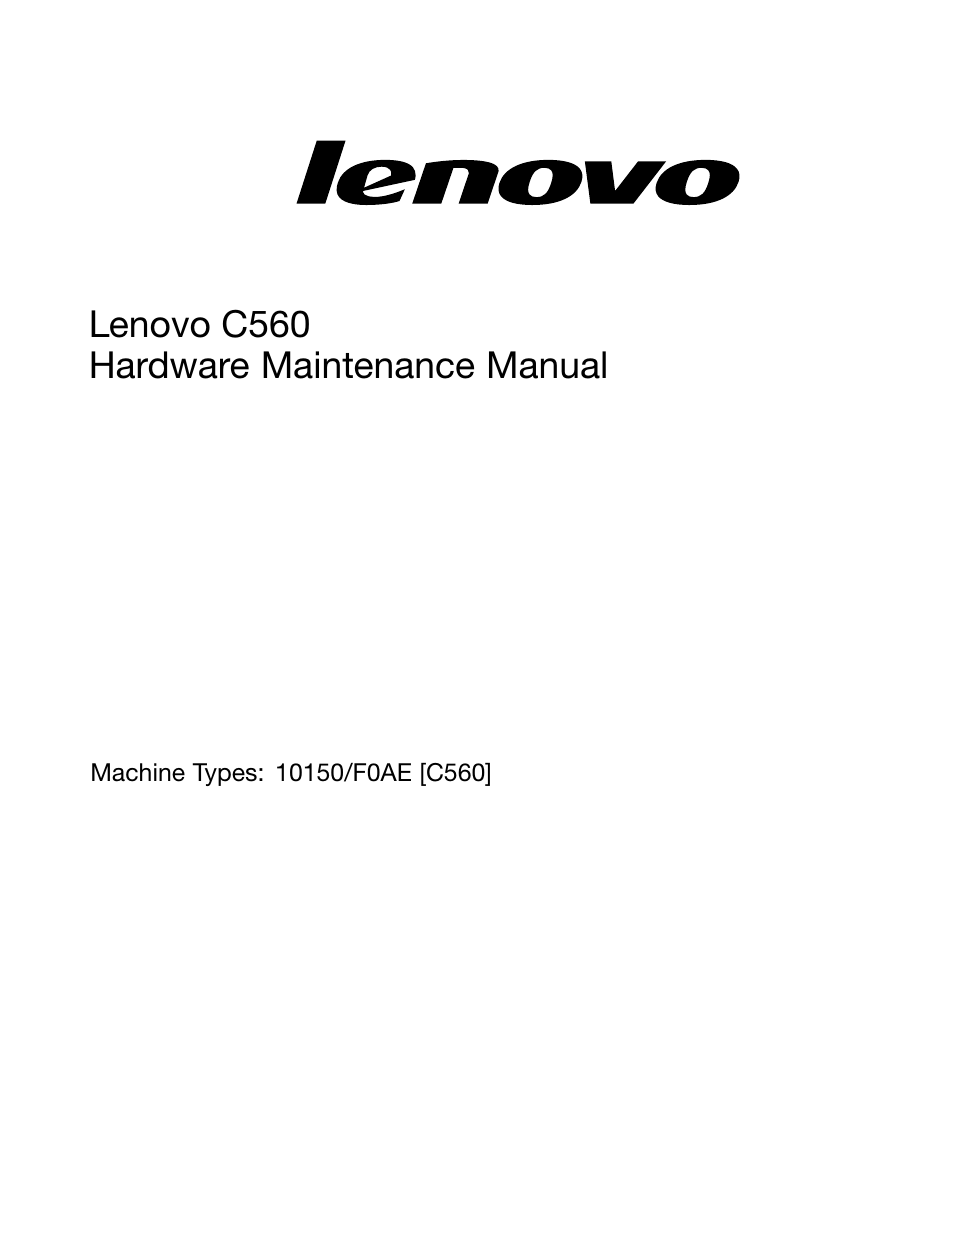 Lenovo c560 hardware maintenance manual | Lenovo C560 All-in-One User  Manual | Page 3 / 55